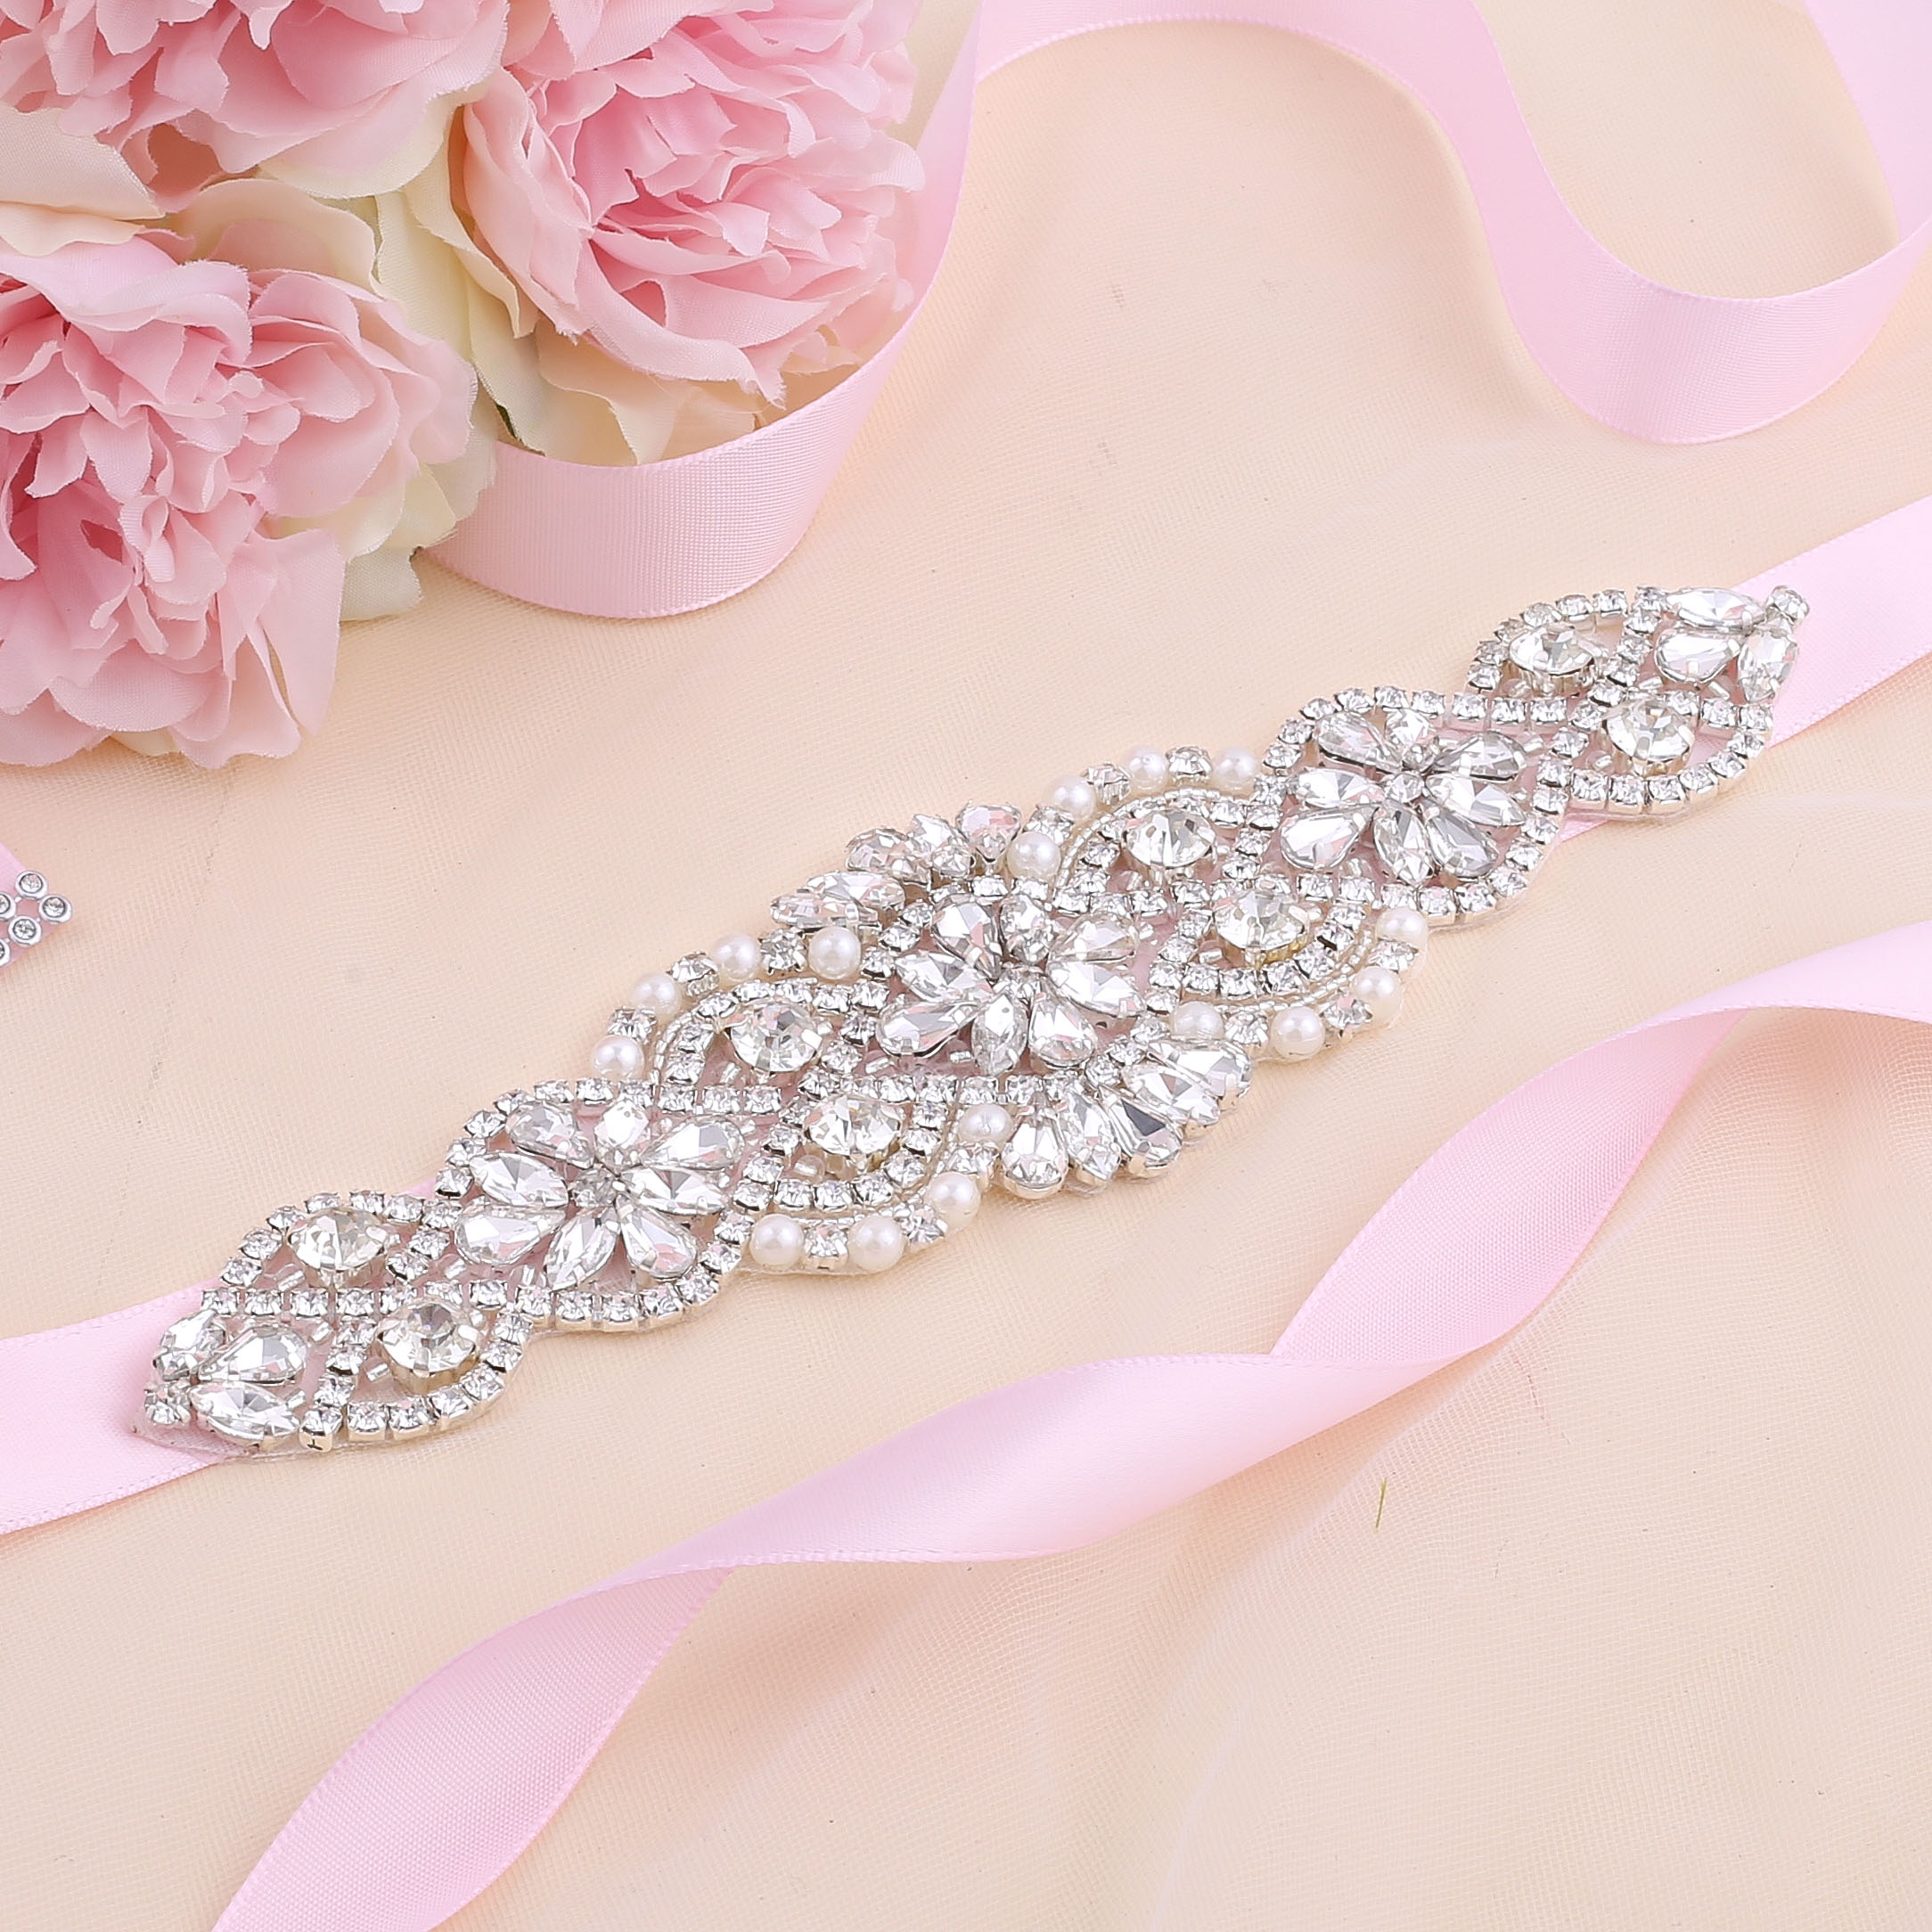 Luxury Silver Crystal Wedding Belts Ceintures De Mariage Rhinestone Applique Female belts for Bridal Accessories 2020